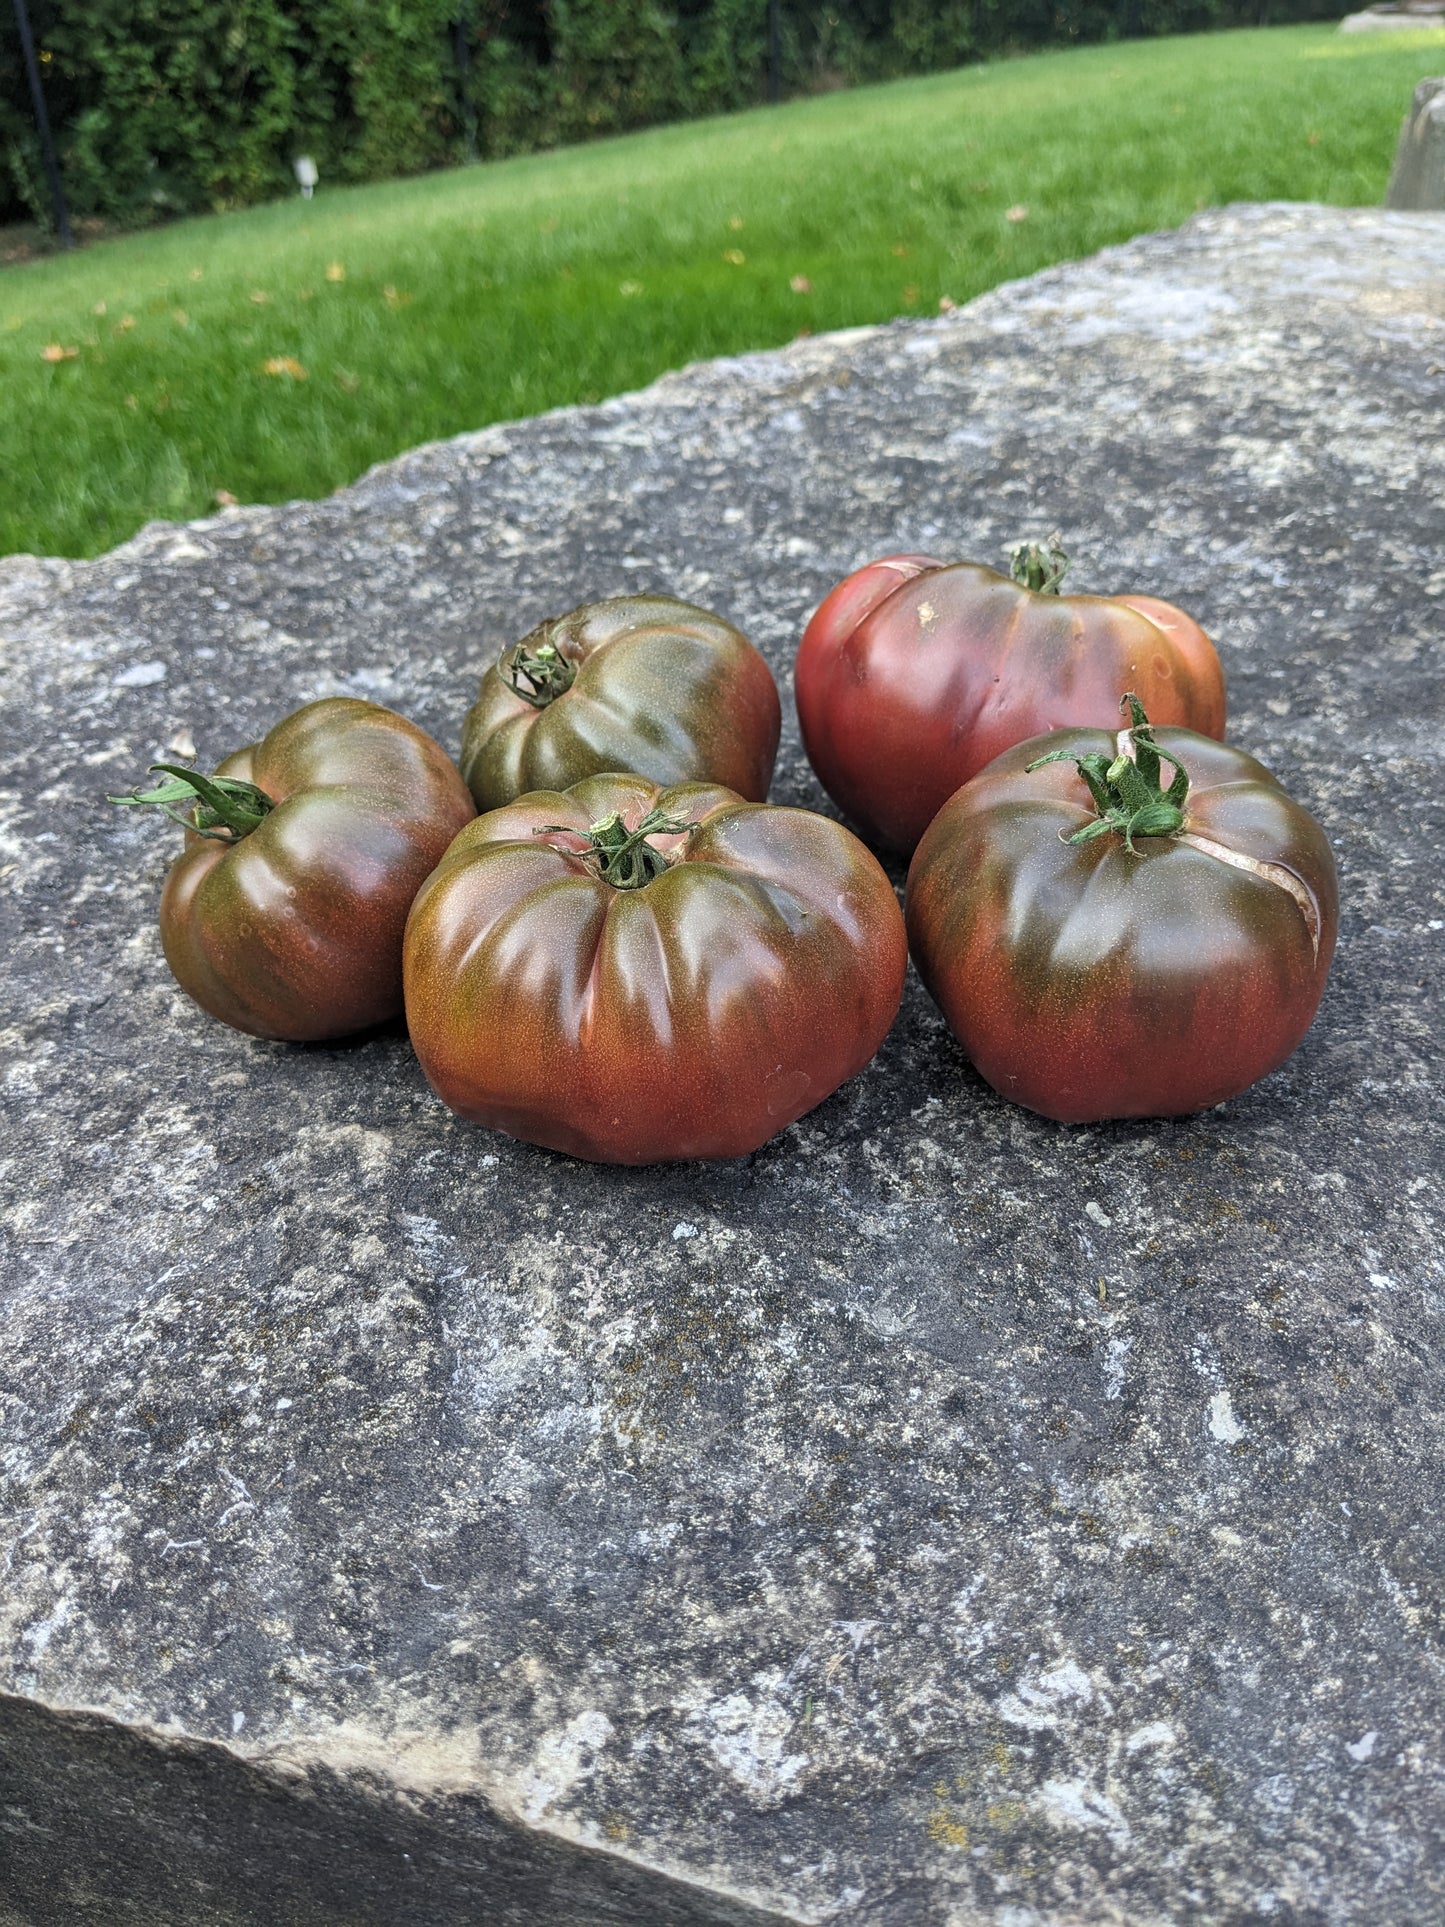 Black Krim Tomato